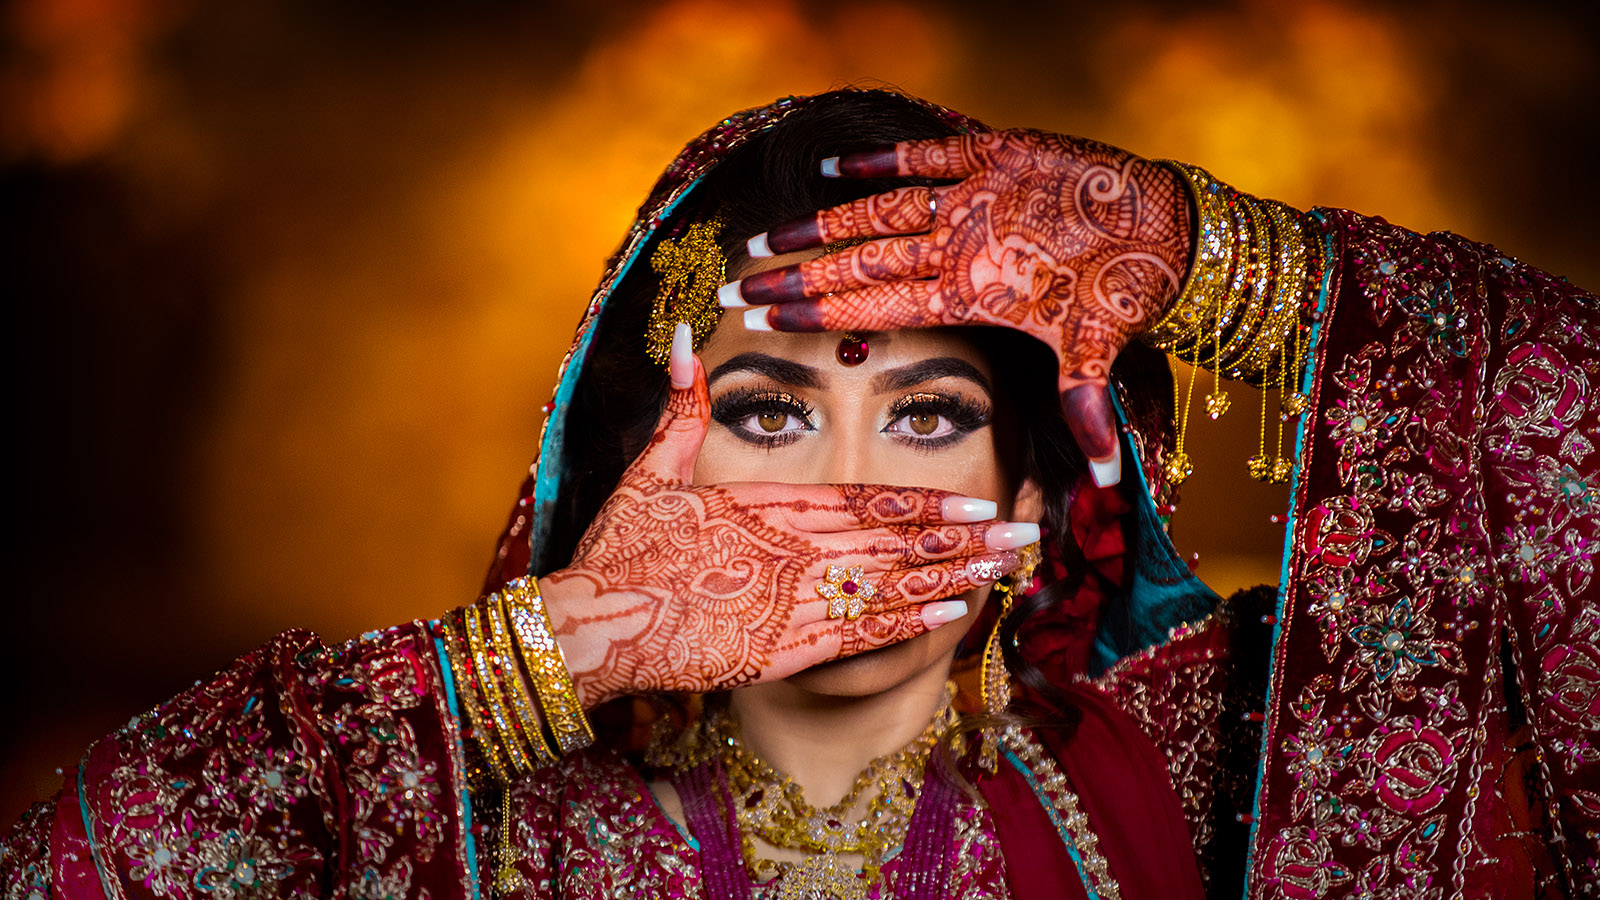 Pakastani Indian Bride Henna